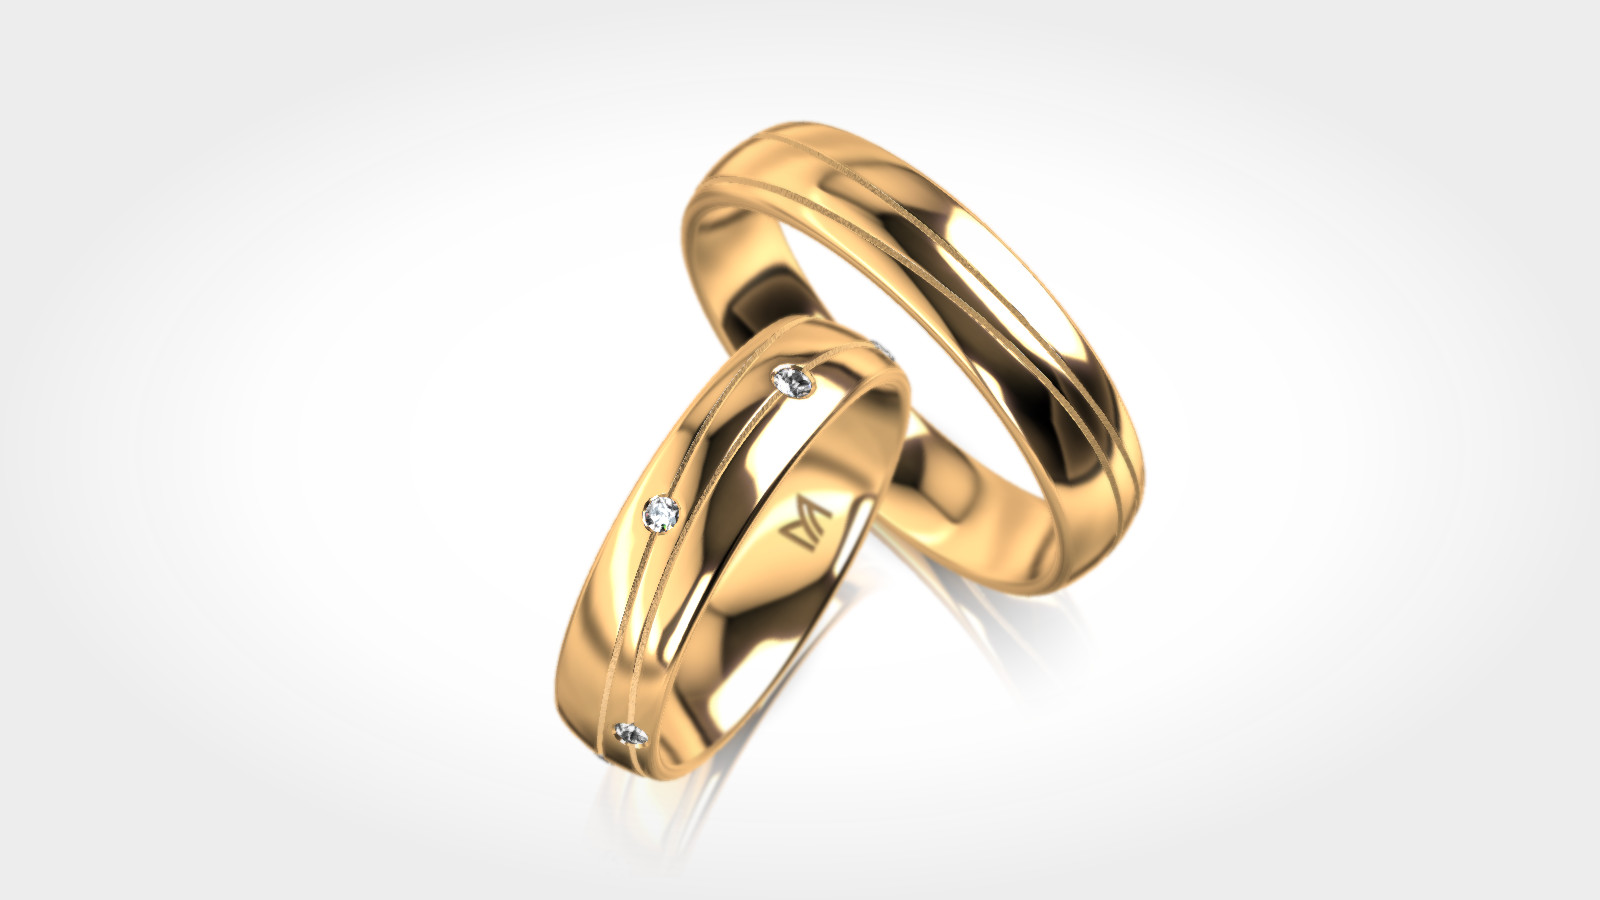 3D Ring Boutique preview 